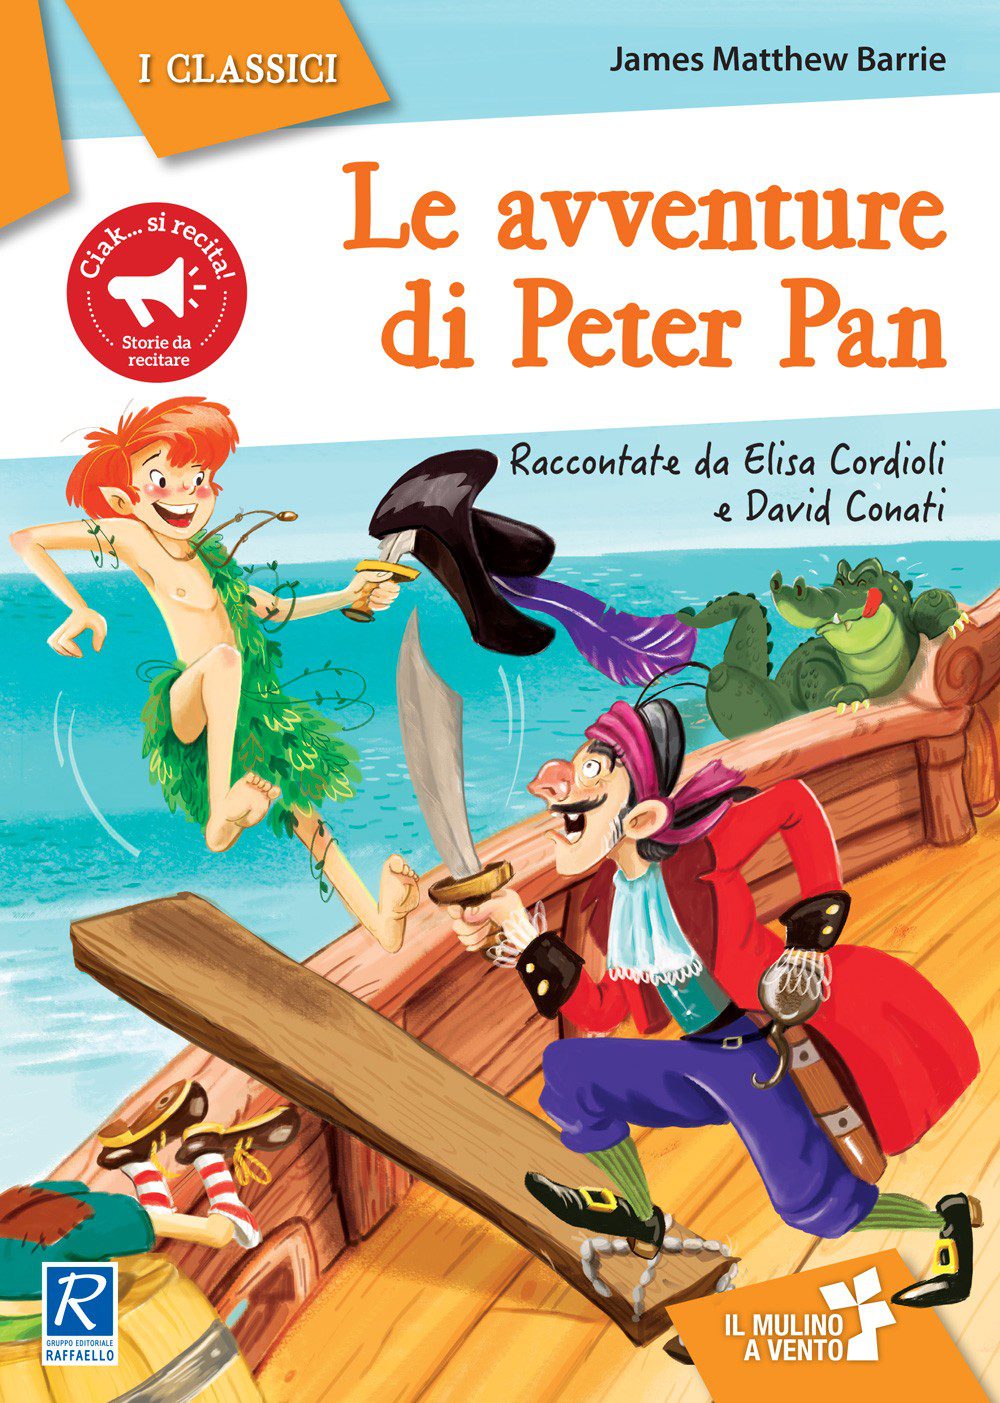 Le avventure di Peter Pan - Raffaello Bookshop